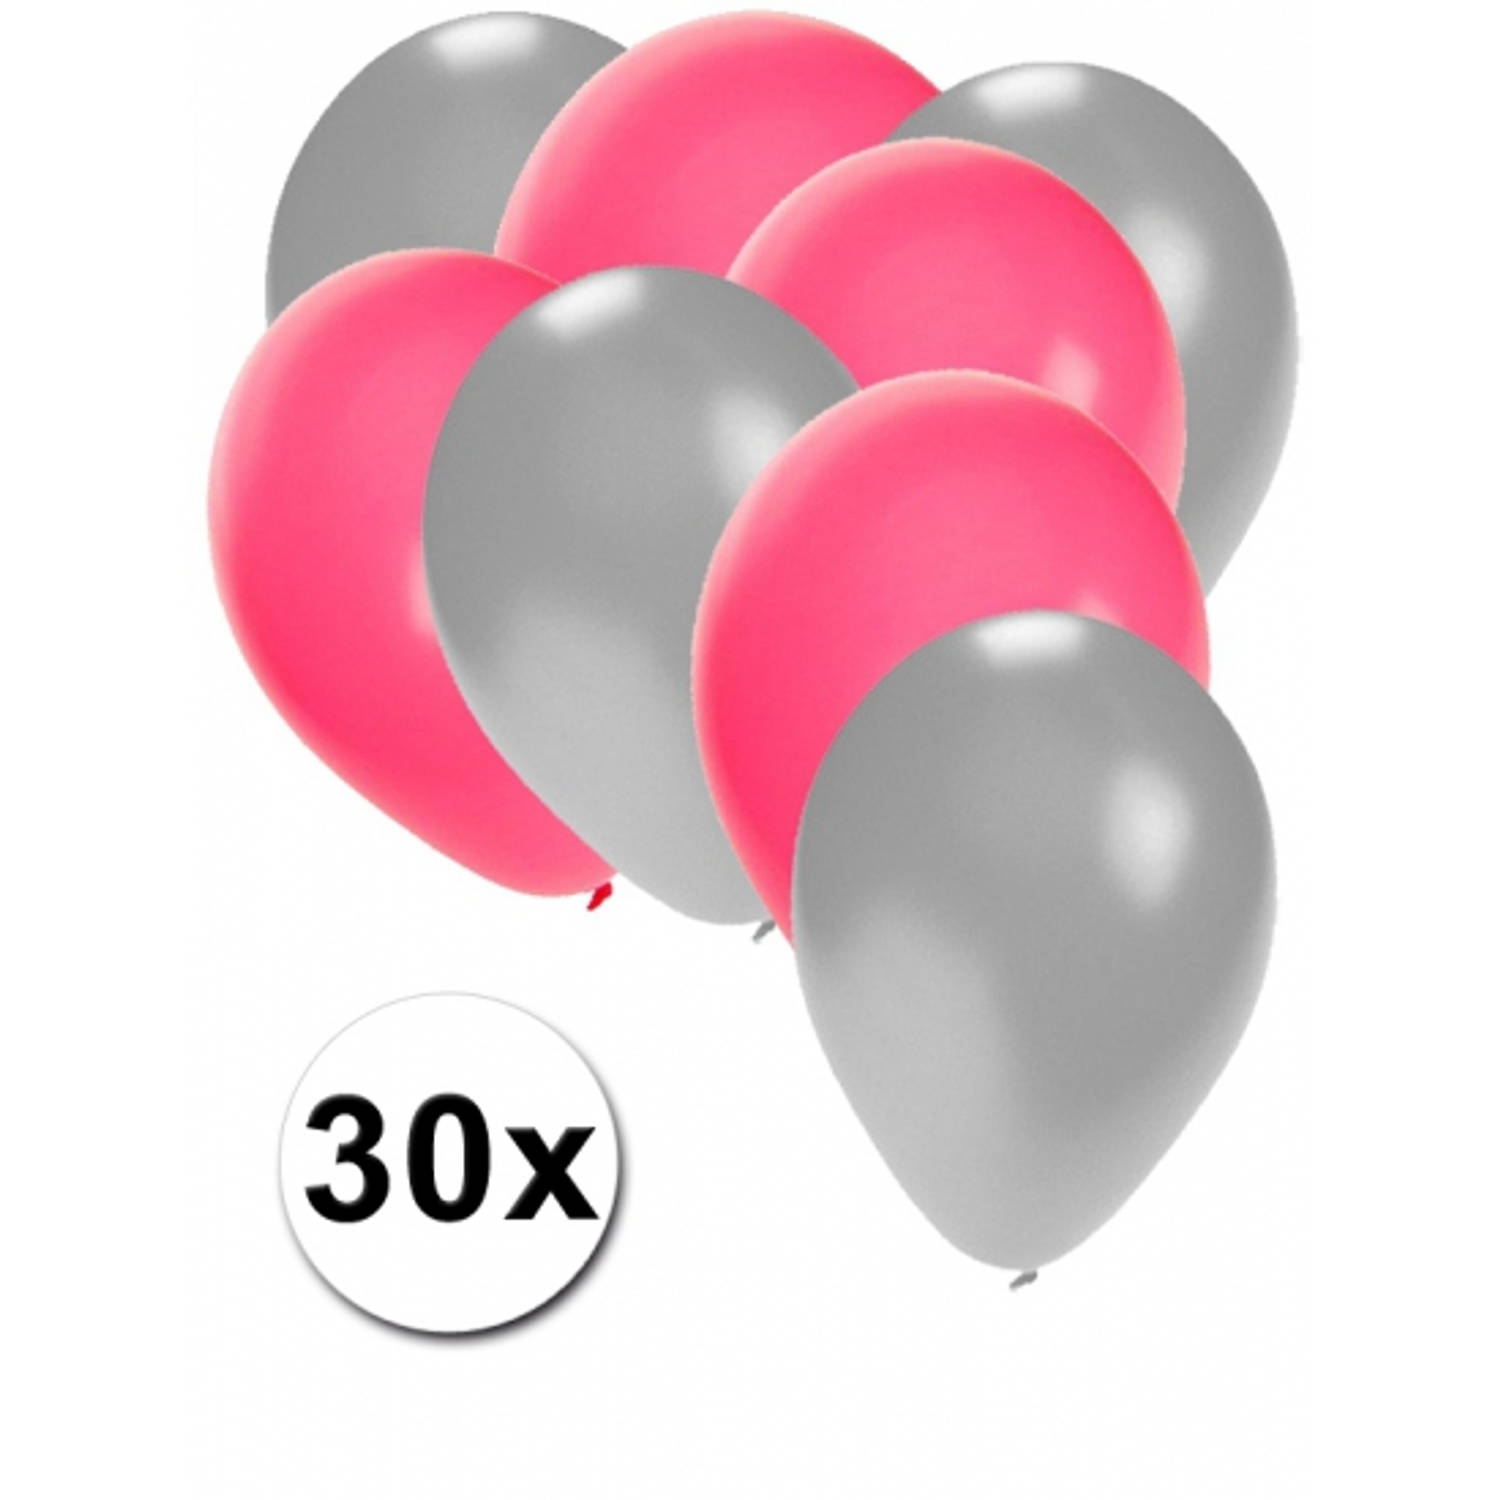 zeevruchten intellectueel analoog Zilveren en roze ballonnen 30 stuks - Ballonnen | Blokker